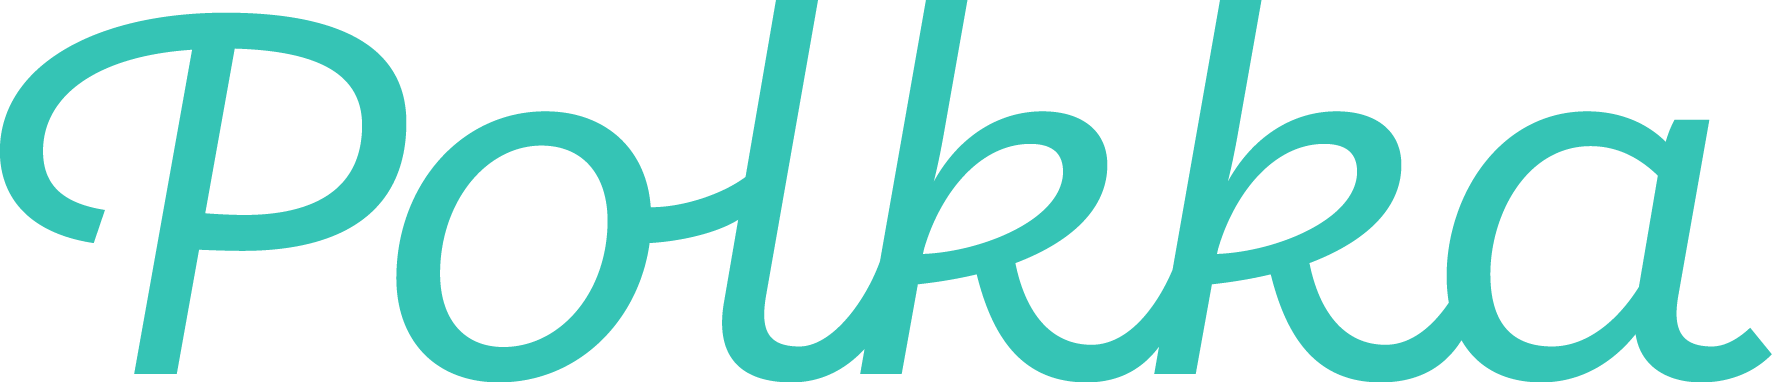 Polkka logo